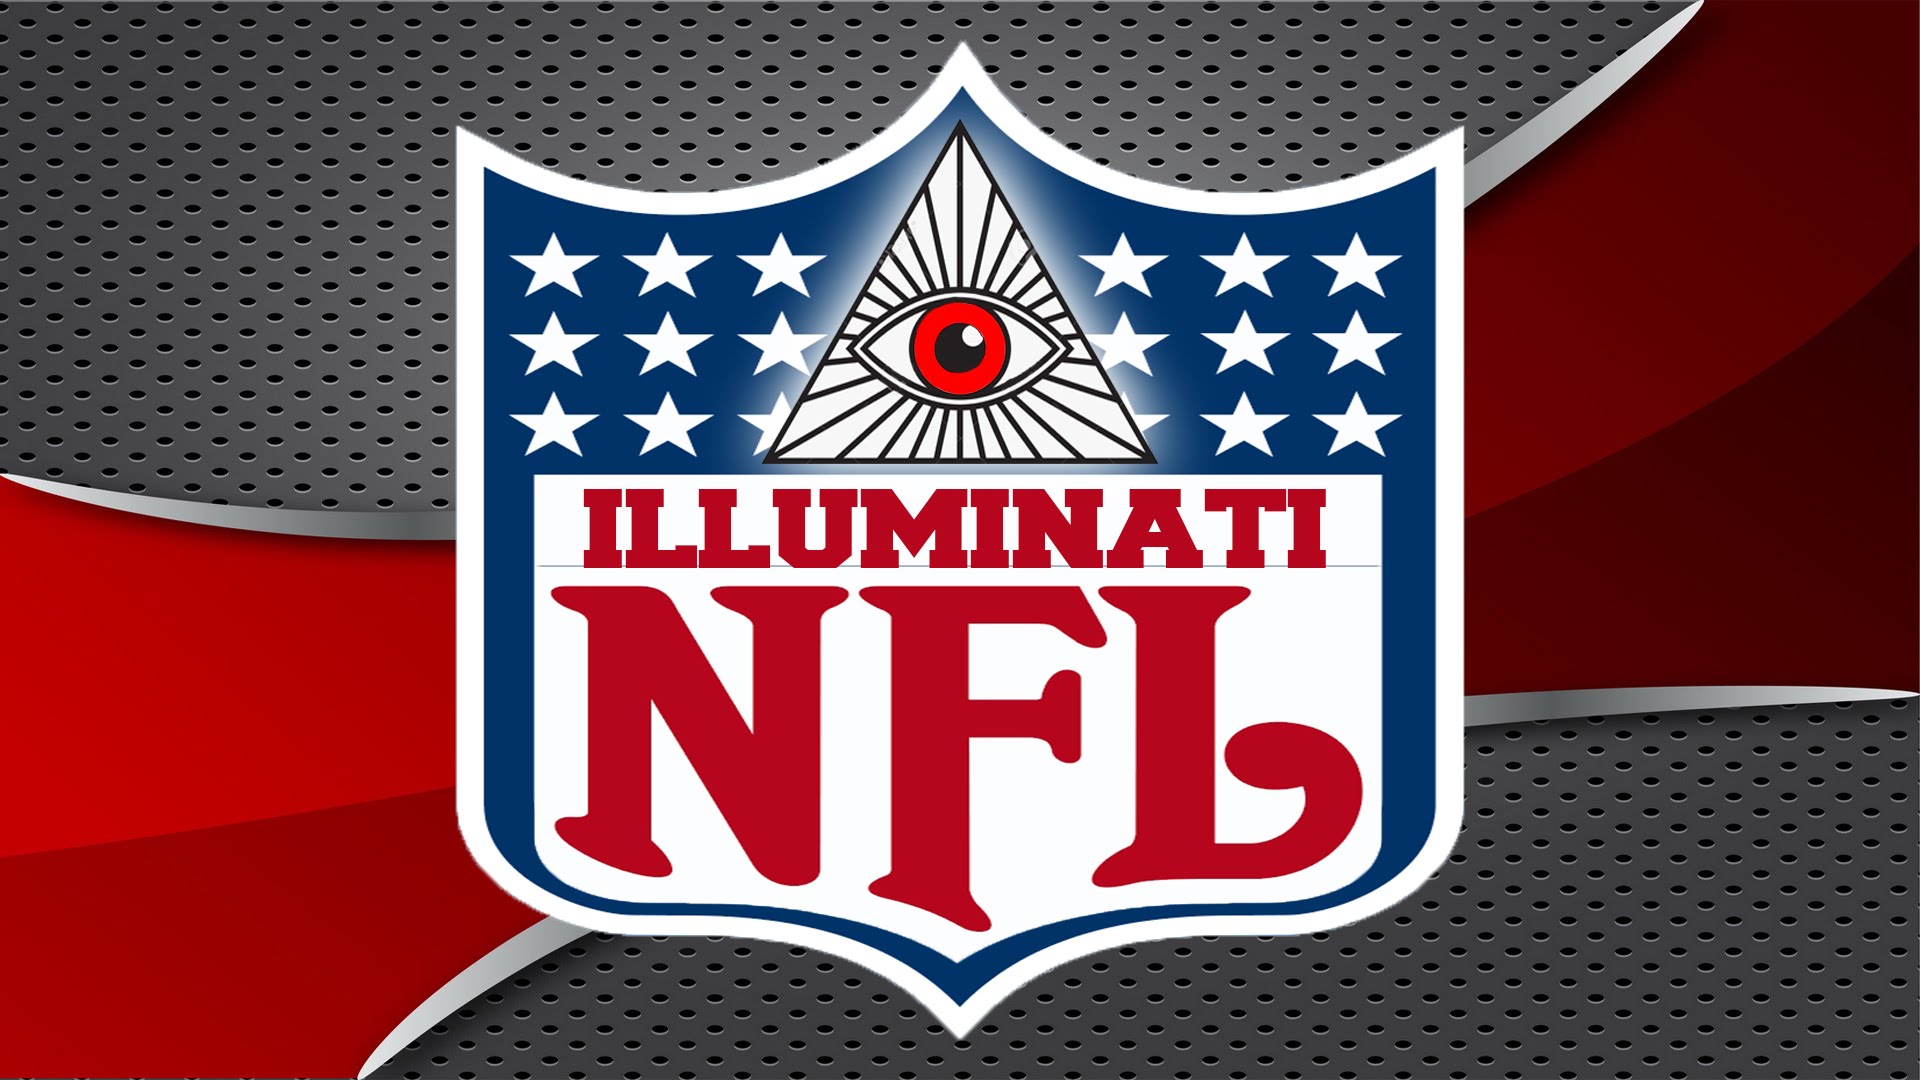 Illuminati & the NFL